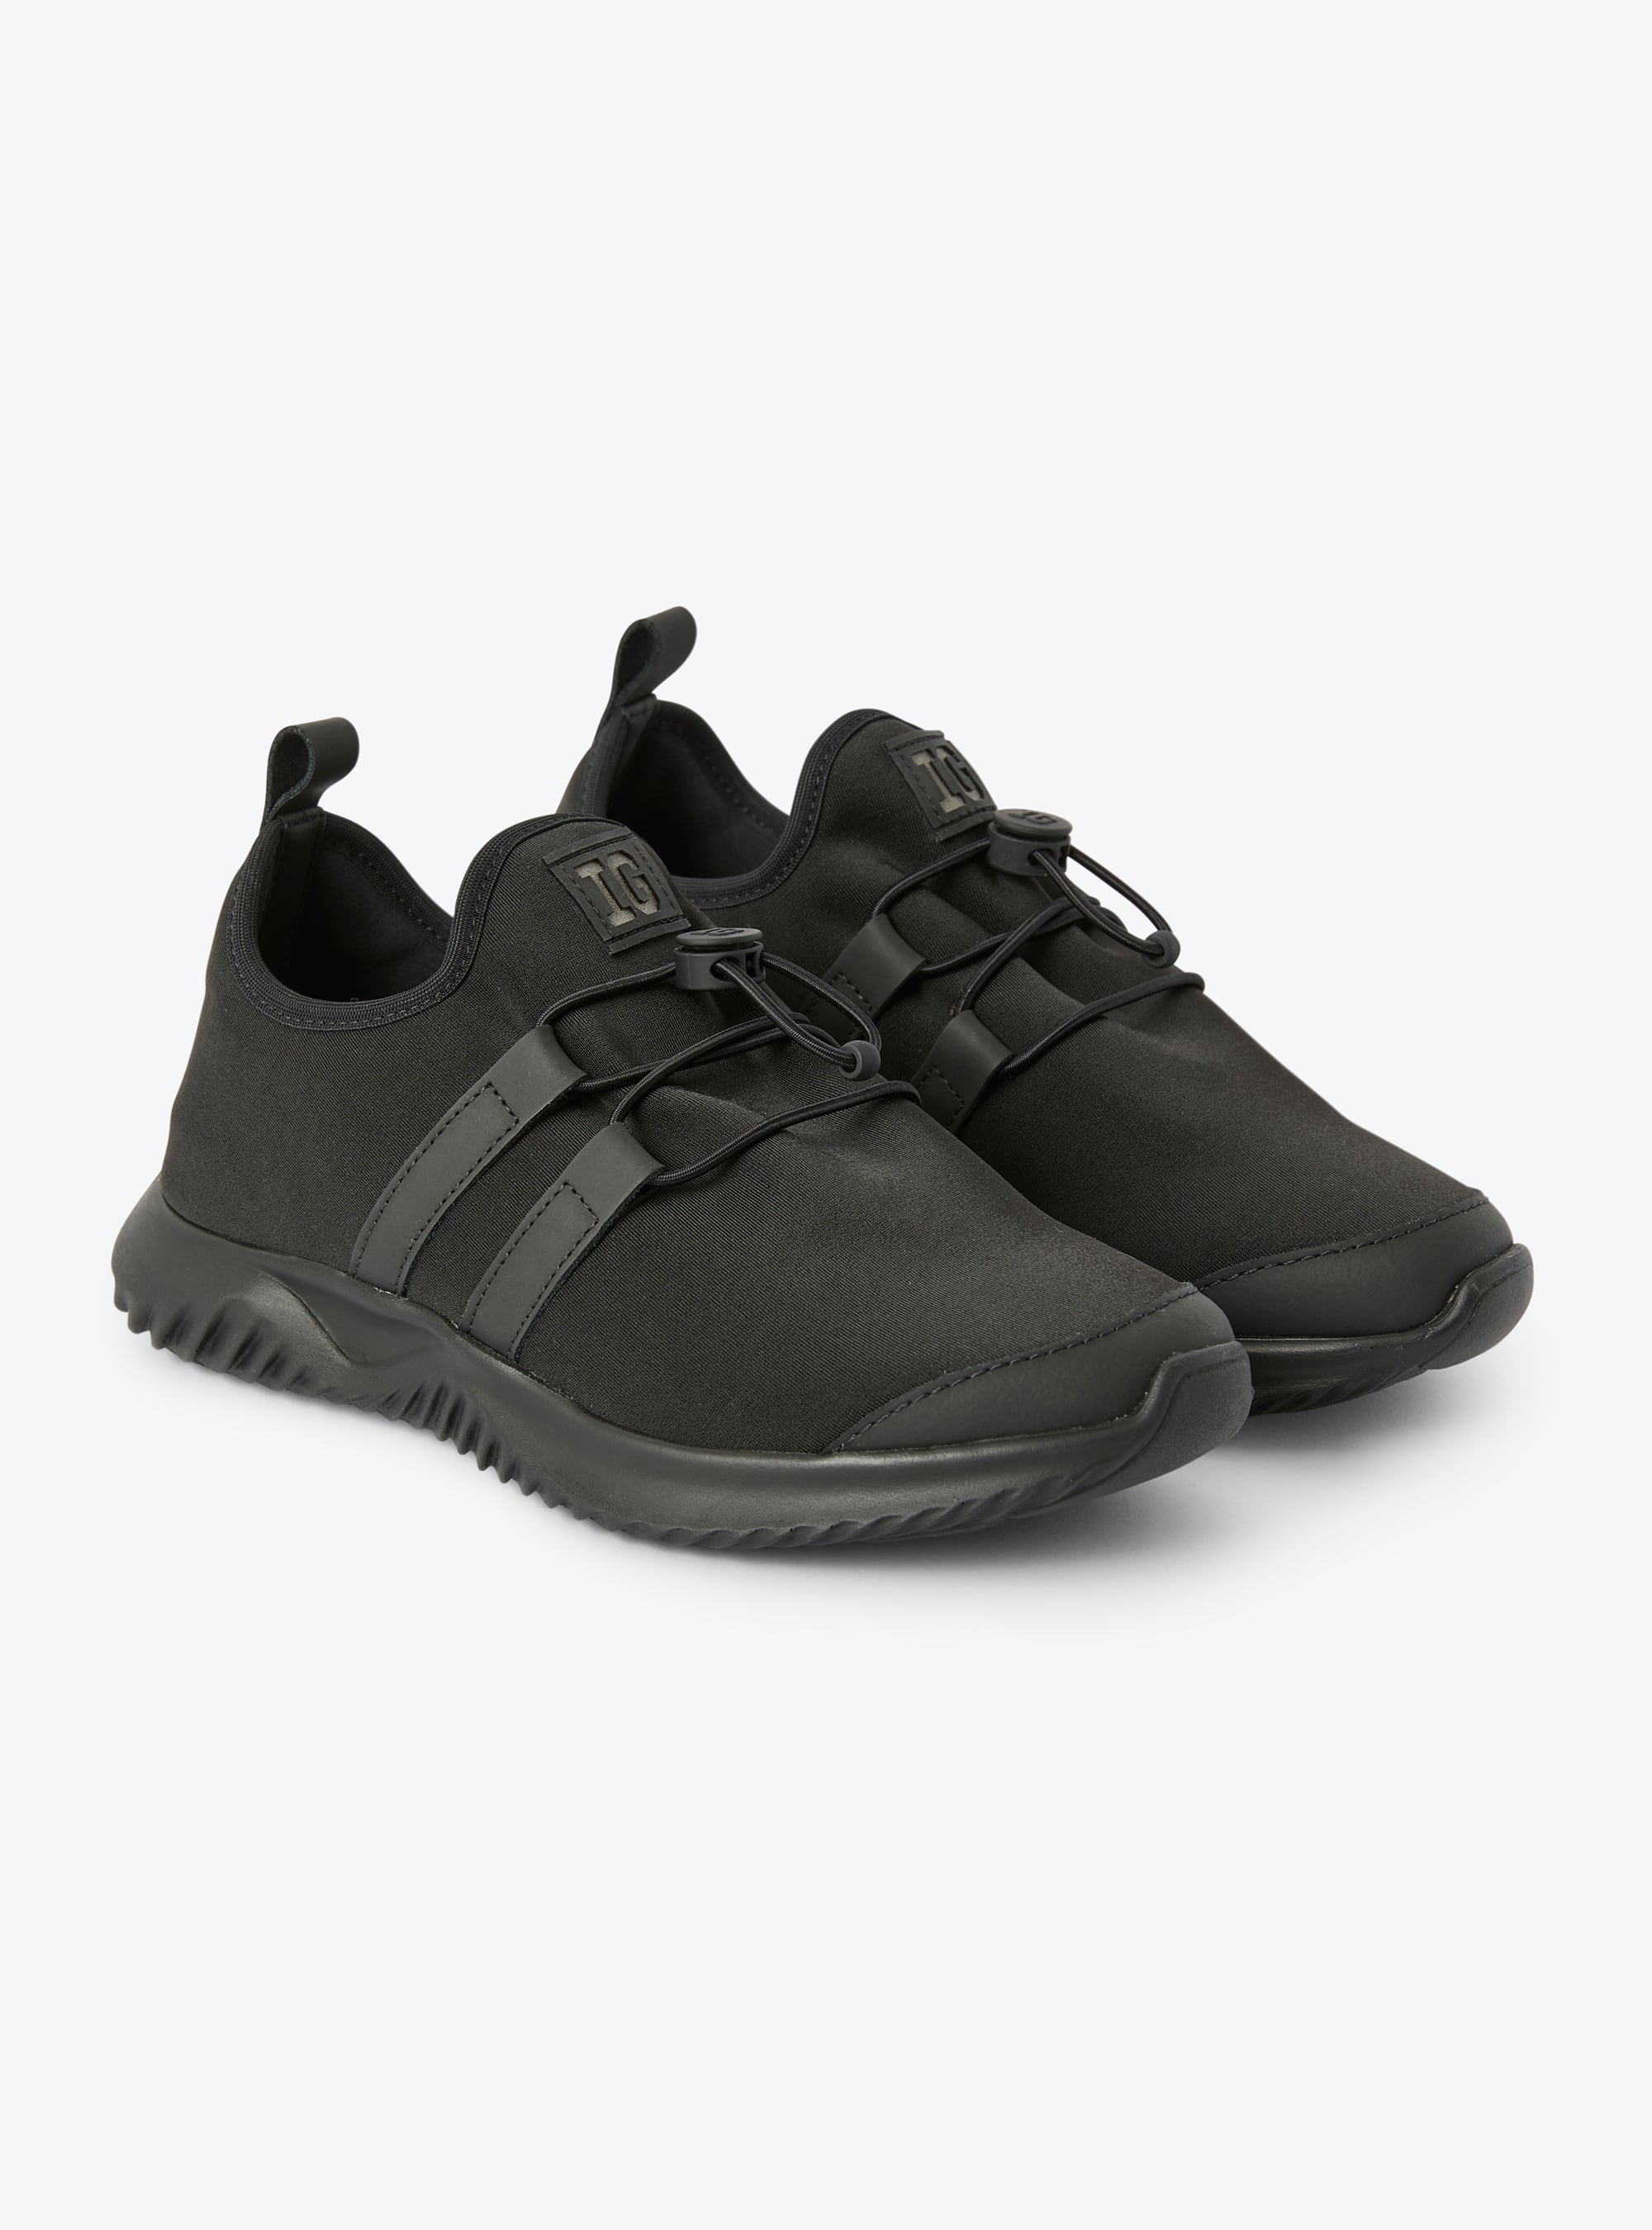 Sneakers IG aus schwarzem Neopren - Schuhe - Il Gufo